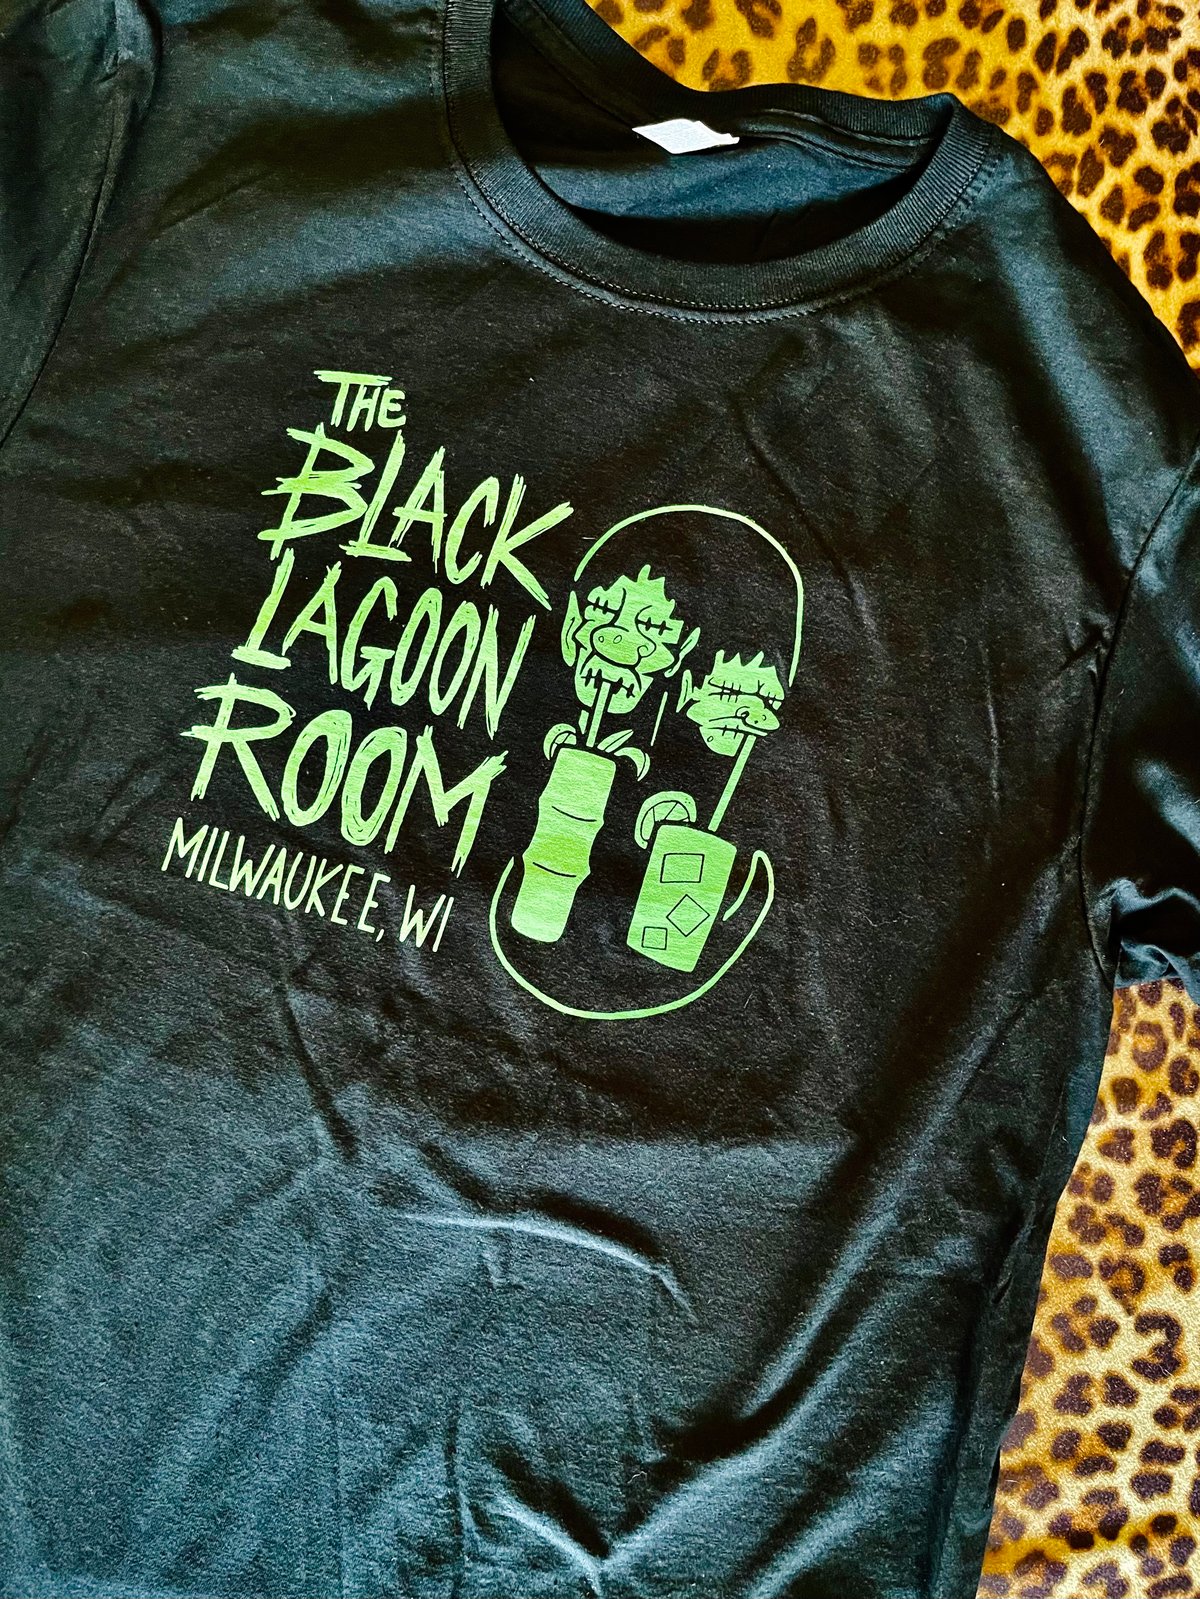 Black Lagoon Room DRUNKIE SHRUNKIES Mascot Logo T-Shirt!